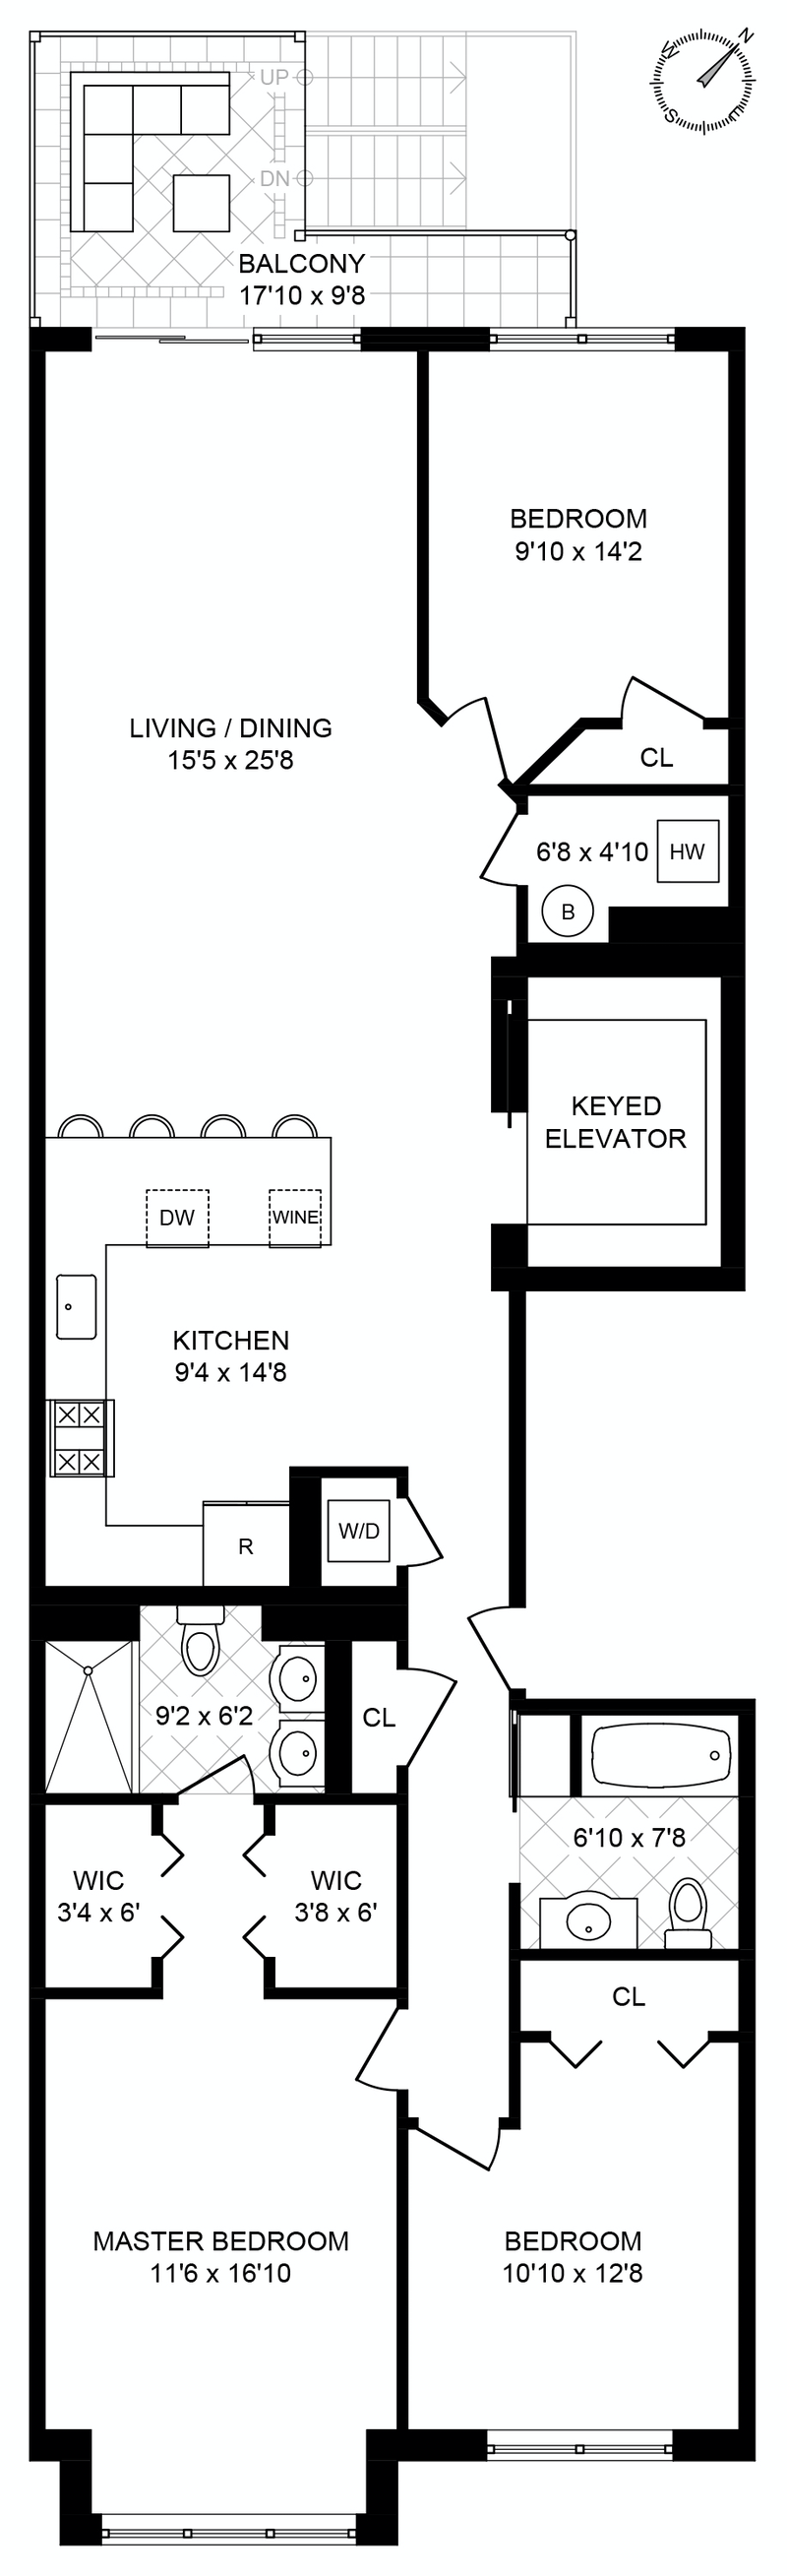 Floorplan for 516 Grand St, 2